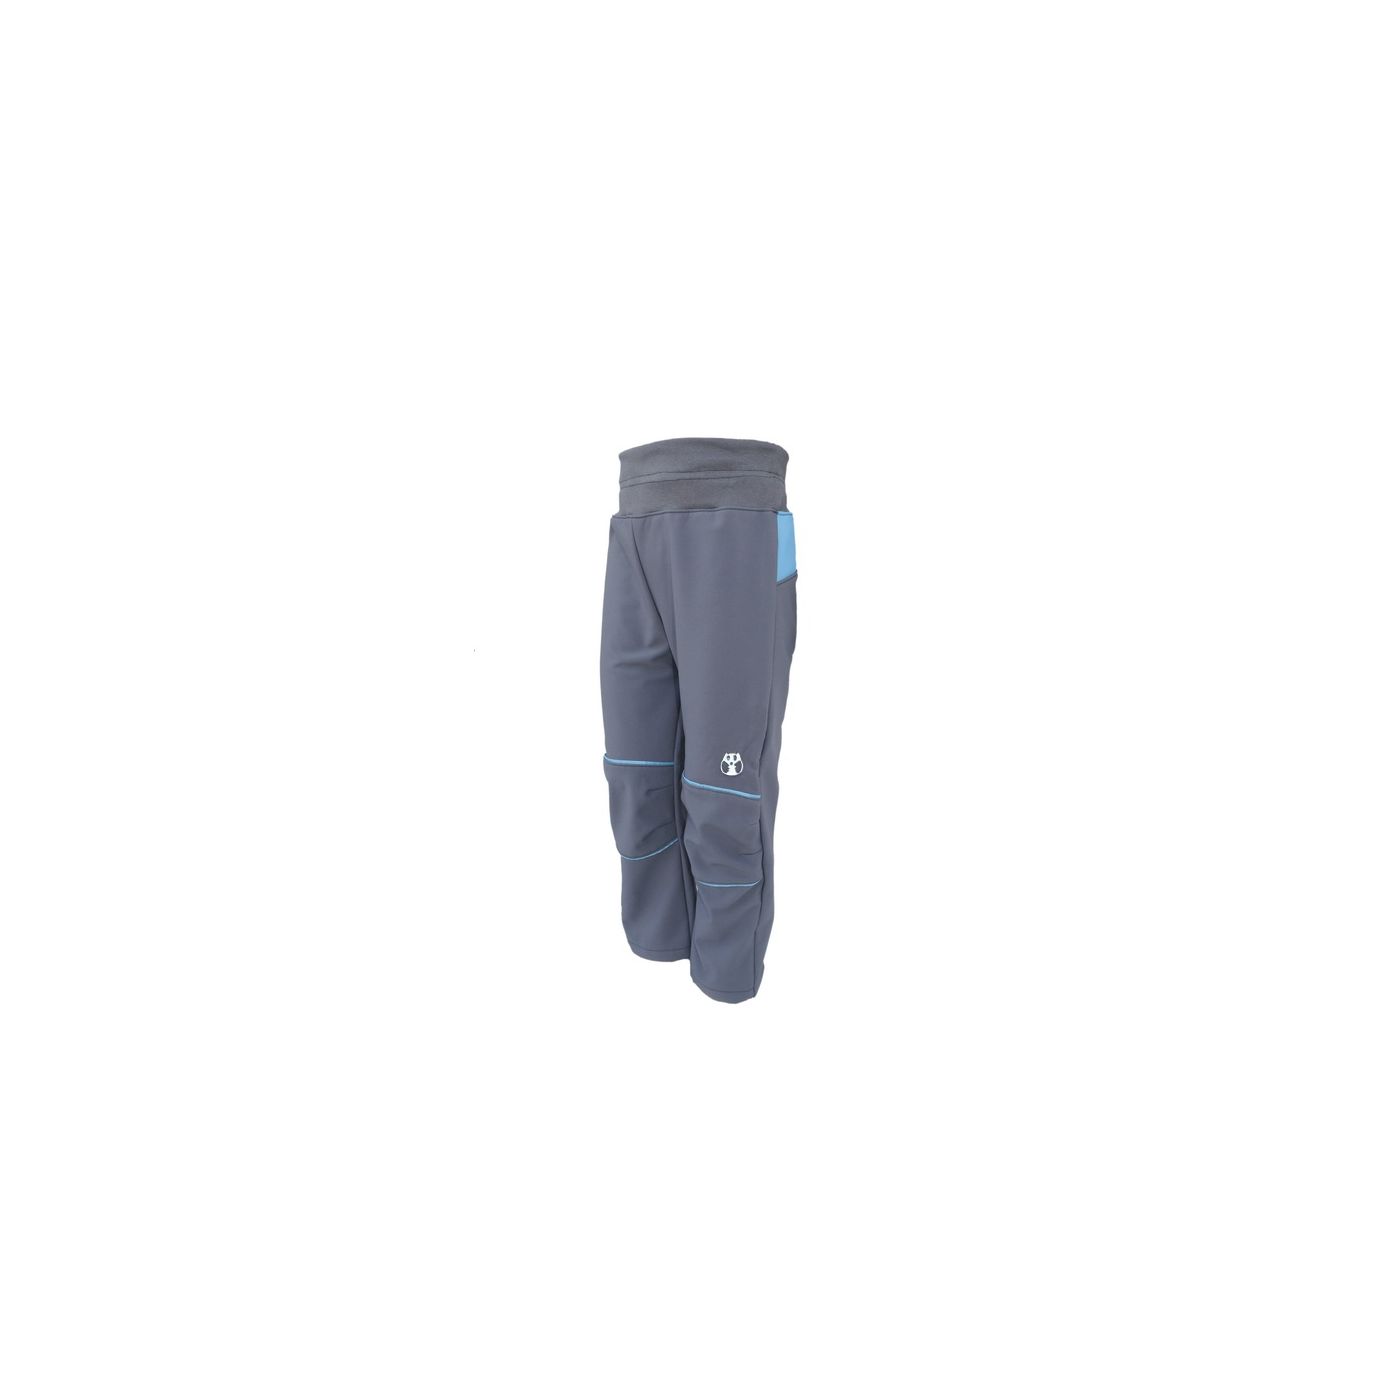 Softshellové kalhoty - tm. šedo - modré